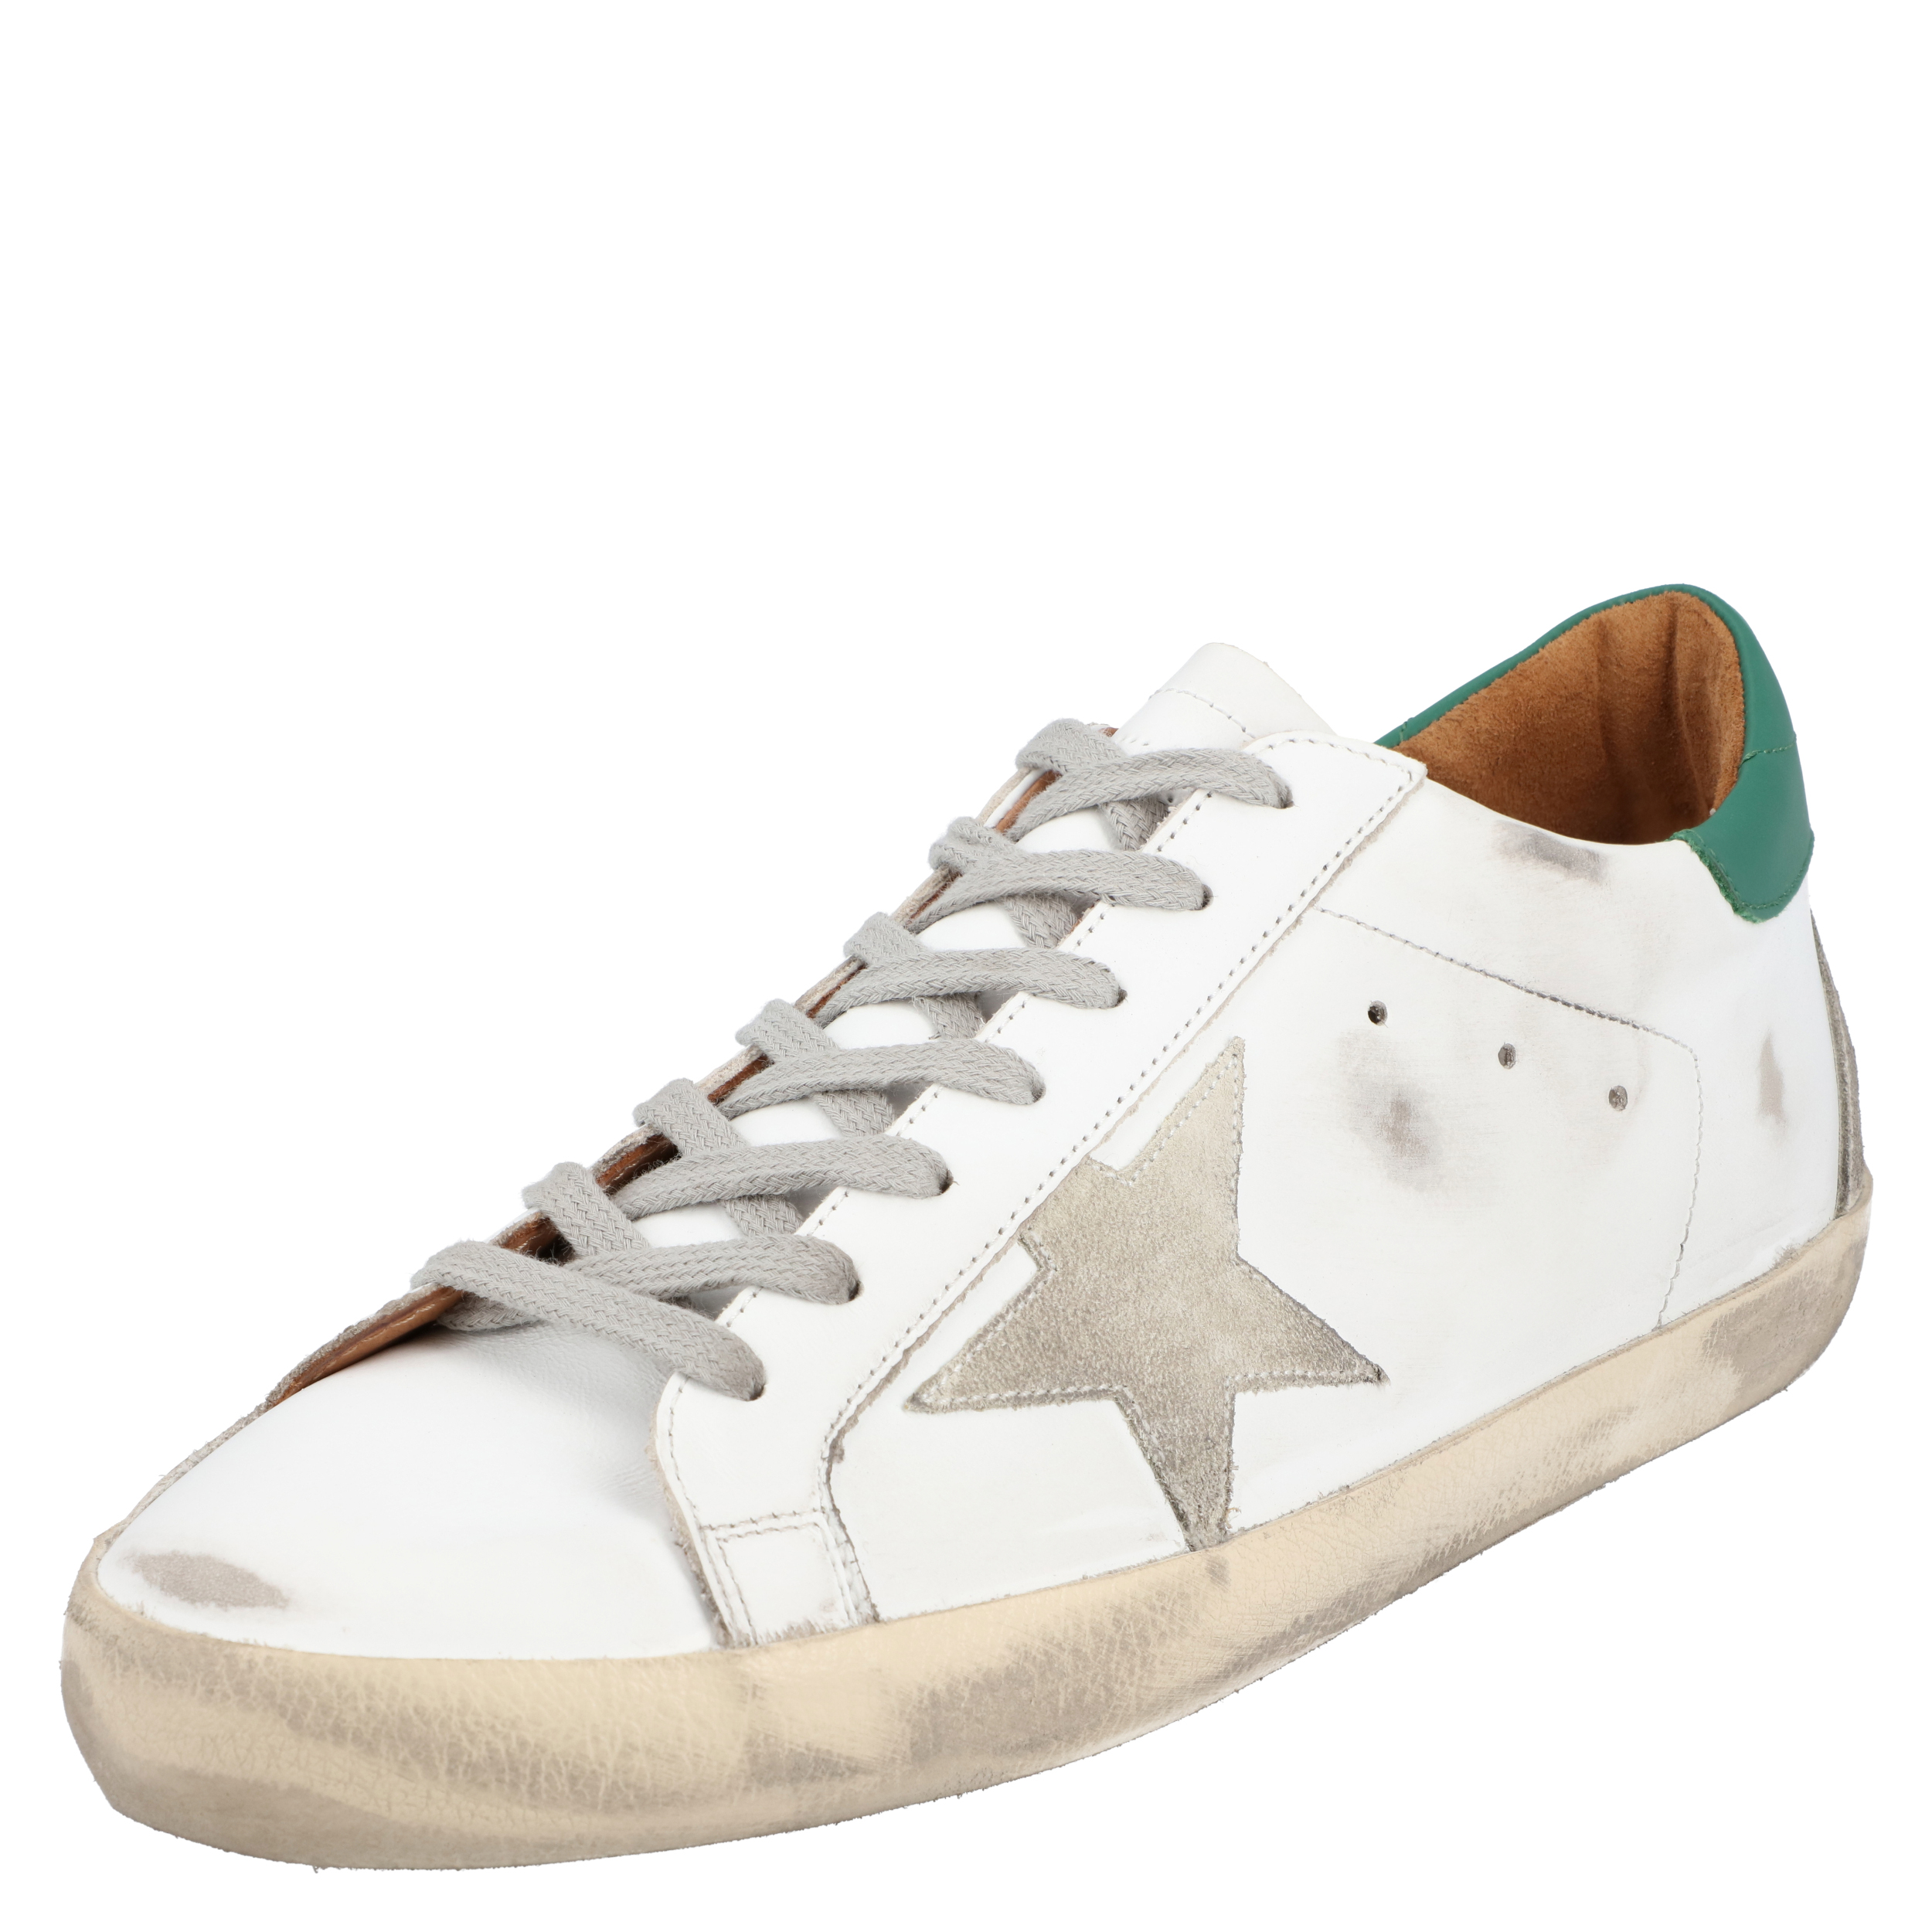 Golden Goose White Leather Sneaker Size EU 38